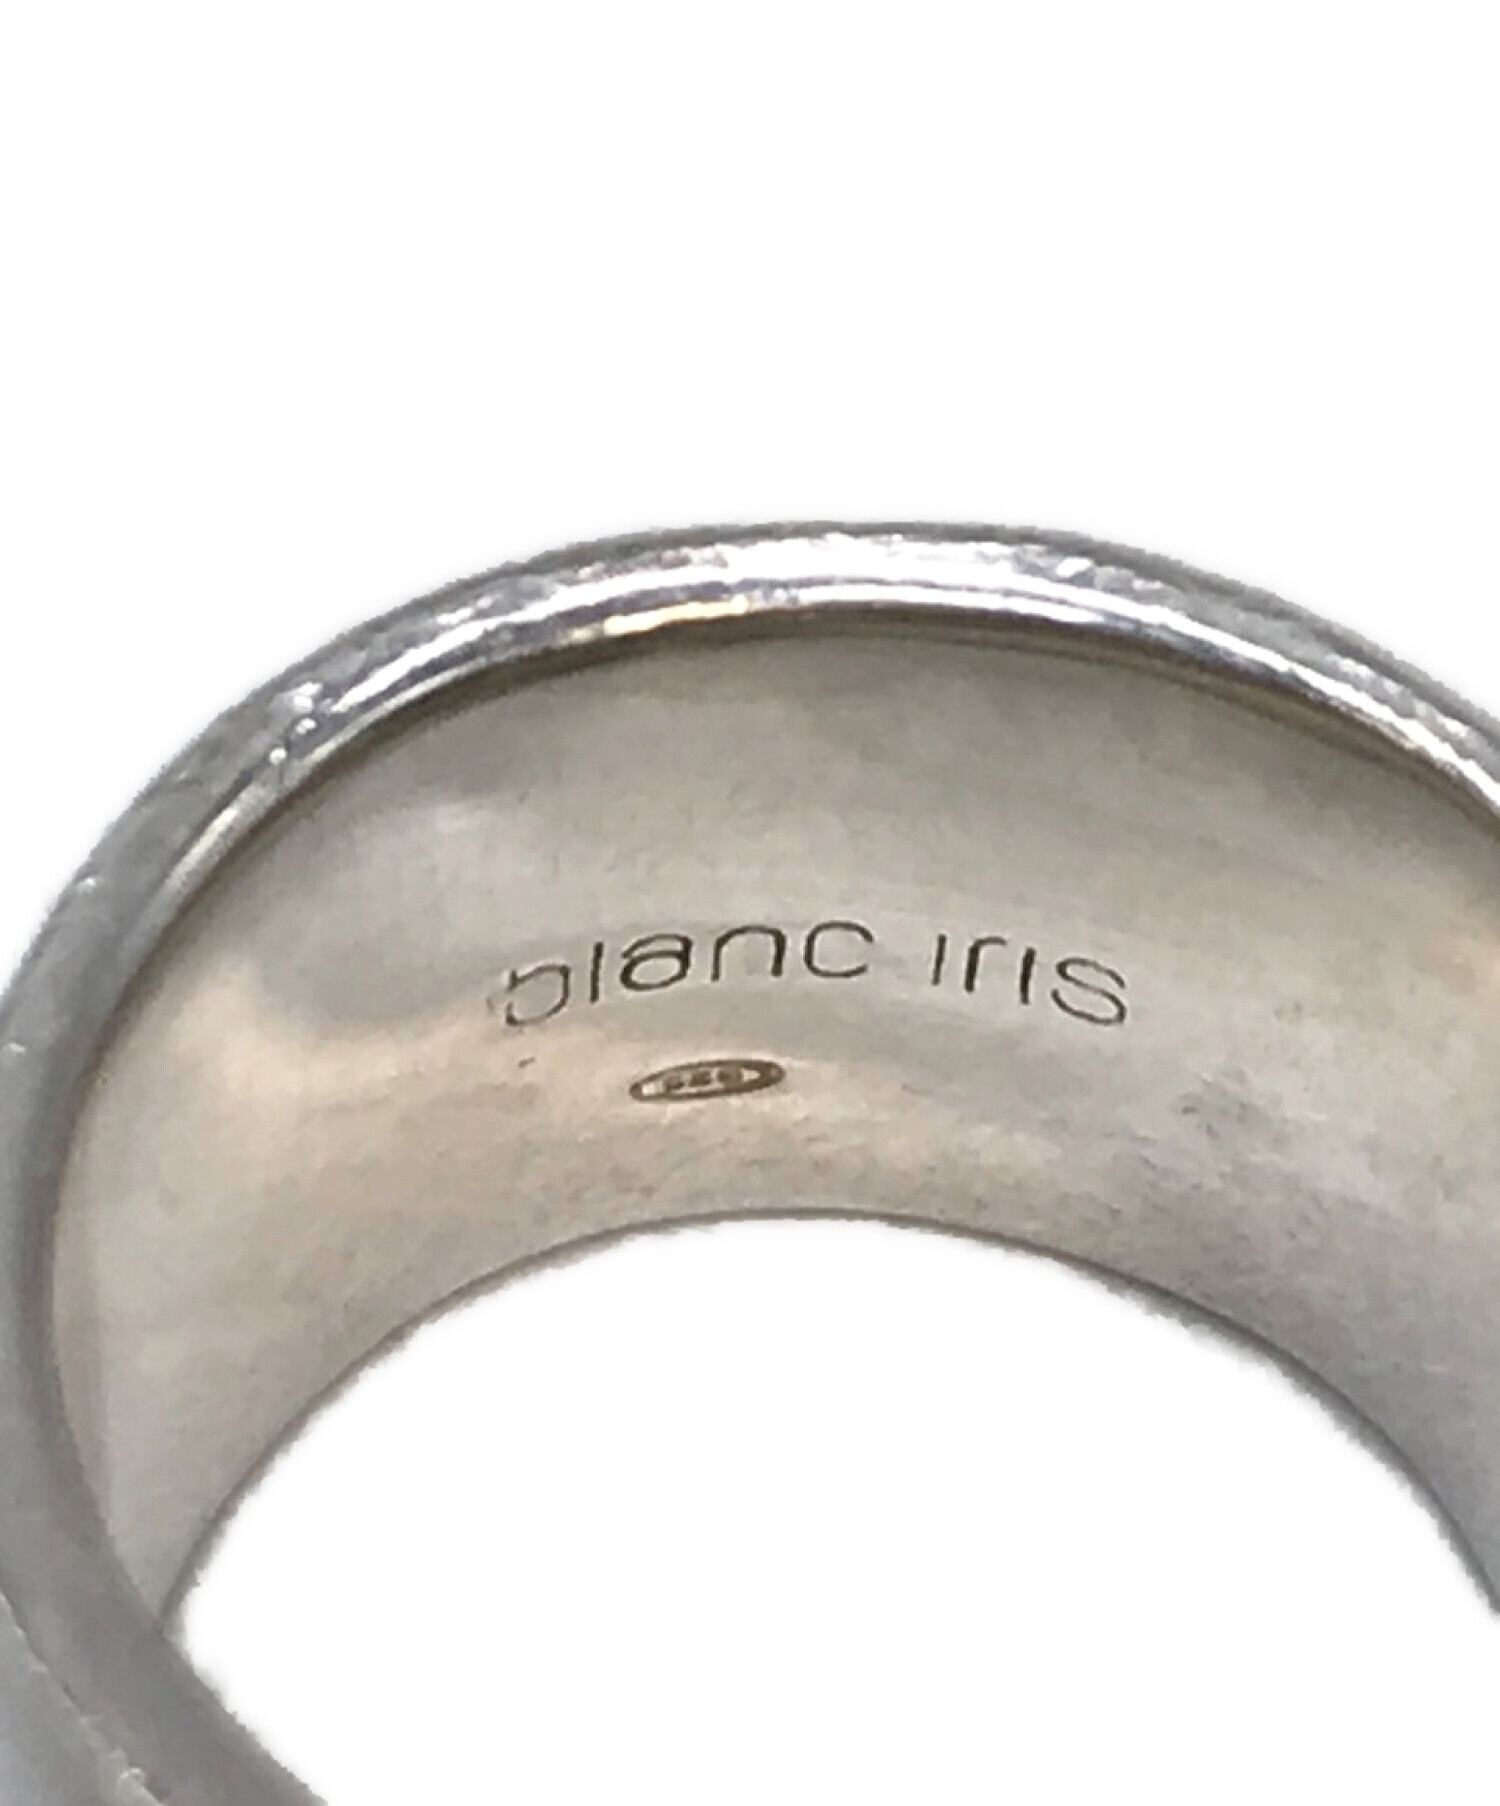 blanciris (ブランイリス) Iris Collection Sterling Silver Ring シルバー サイズ:9号